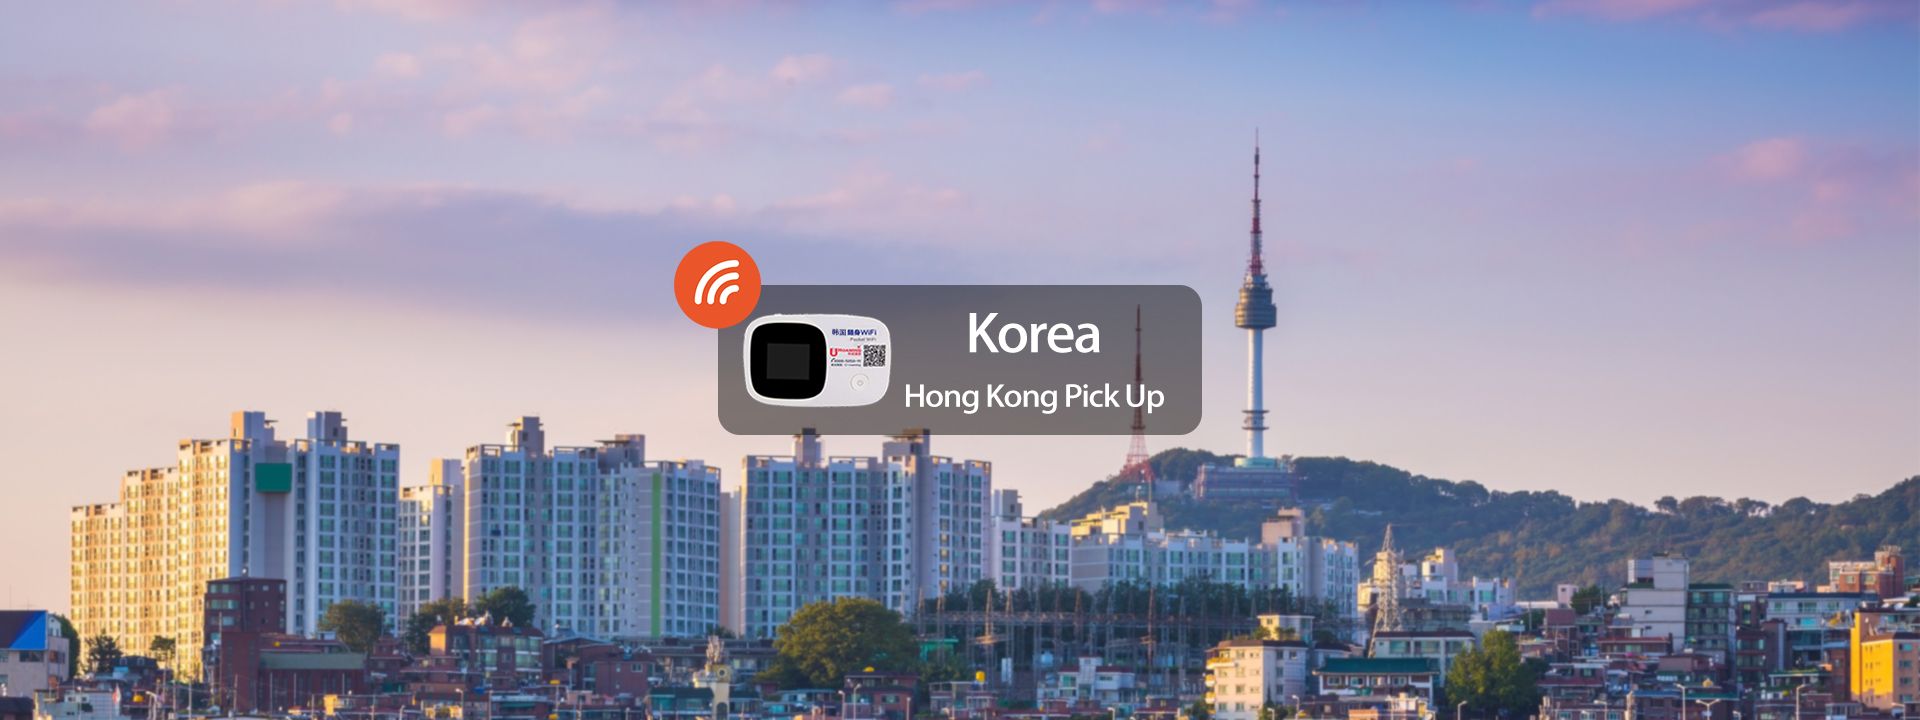 Imagen del tour: [SALE] 4G WiFi (Hong Kong Pick Up) for South Korea from Uroaming